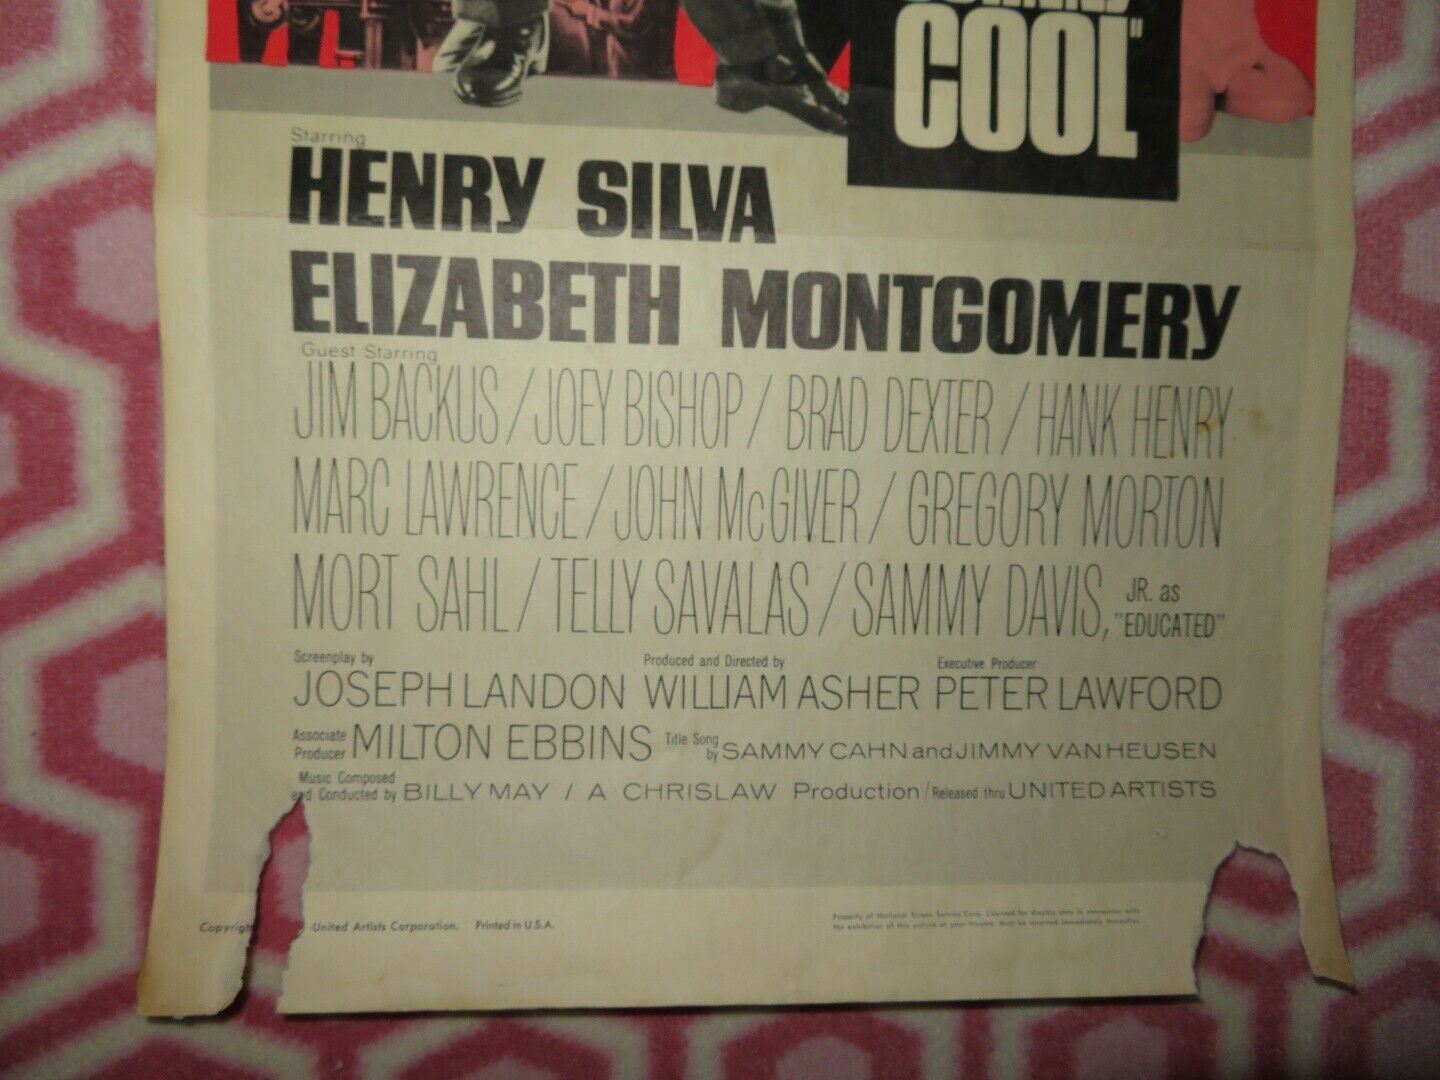 JOHNNY COOL US INSERT (14"x 36") POSTER HENRY SILVA ELIZABETH MONTGOMERY 1963